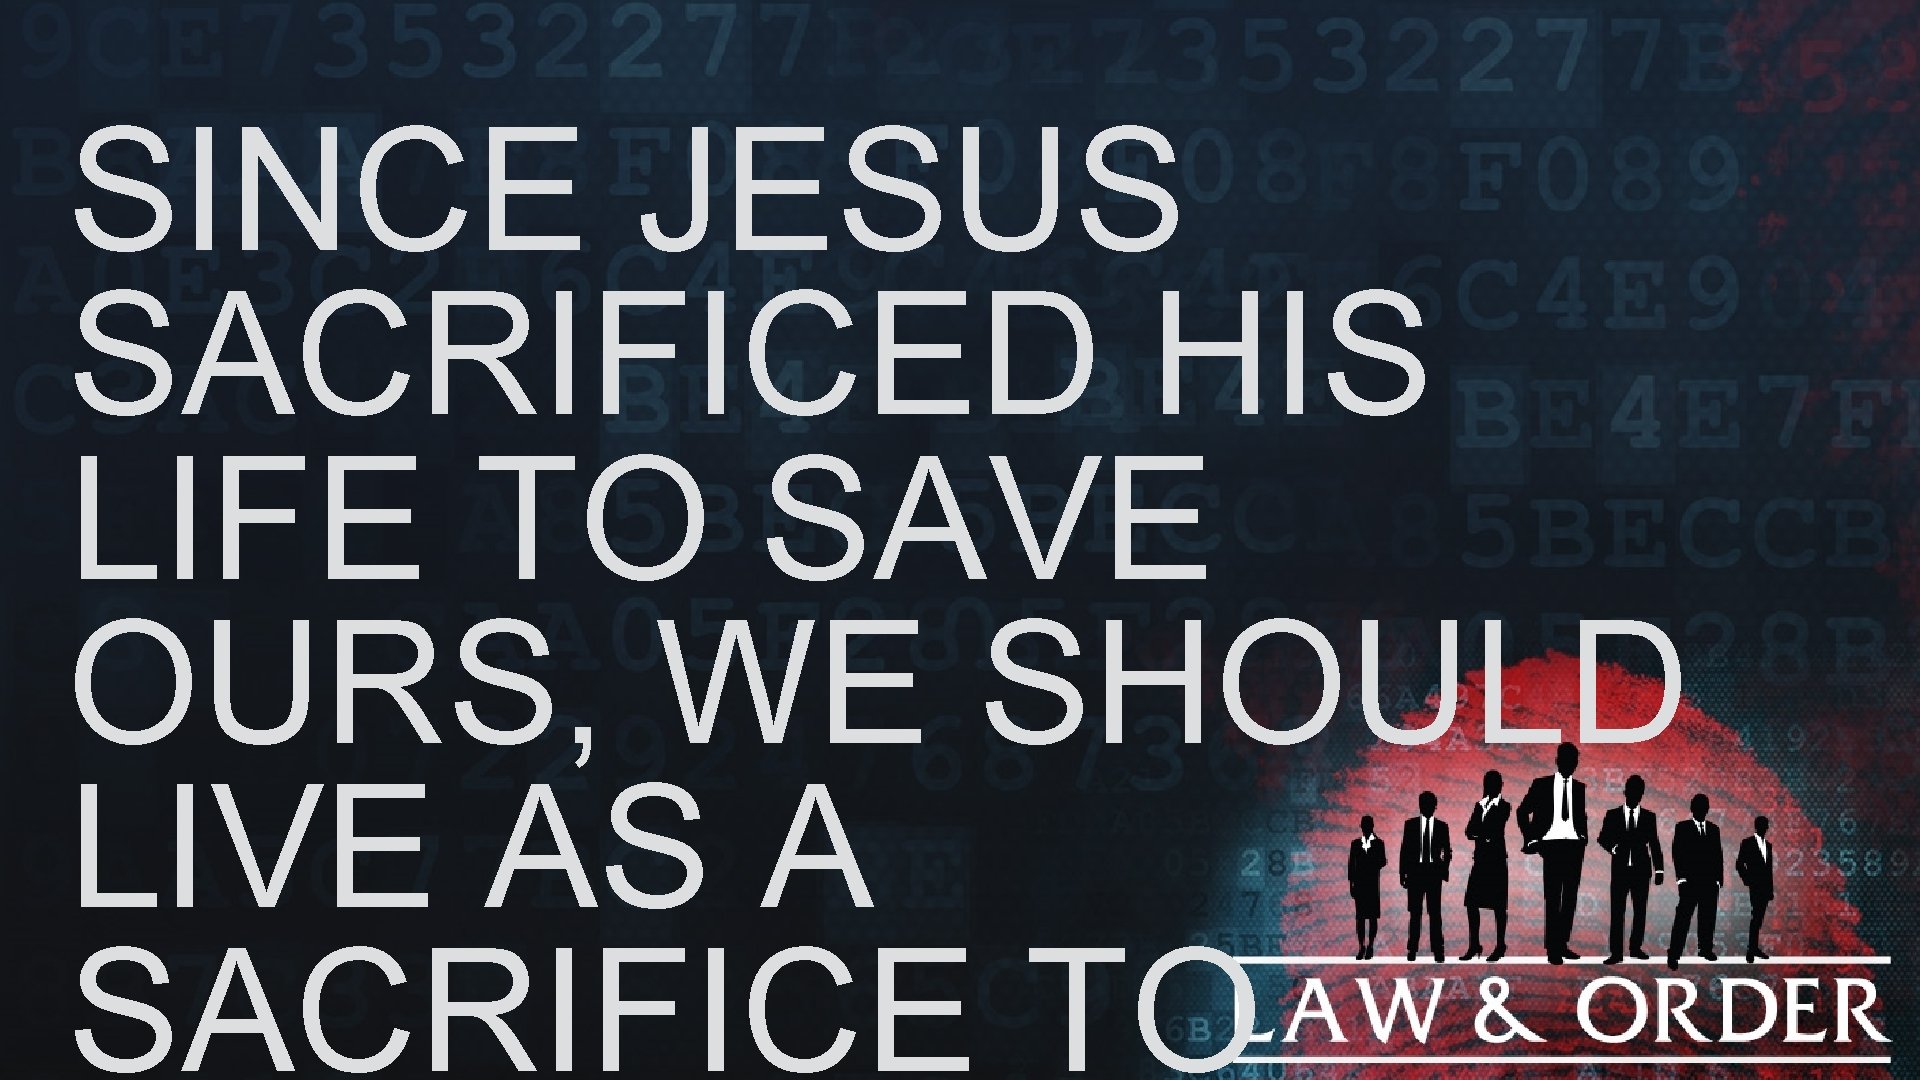 SINCE JESUS SACRIFICED HIS LIFE TO SAVE OURS, WE SHOULD LIVE AS A SACRIFICE